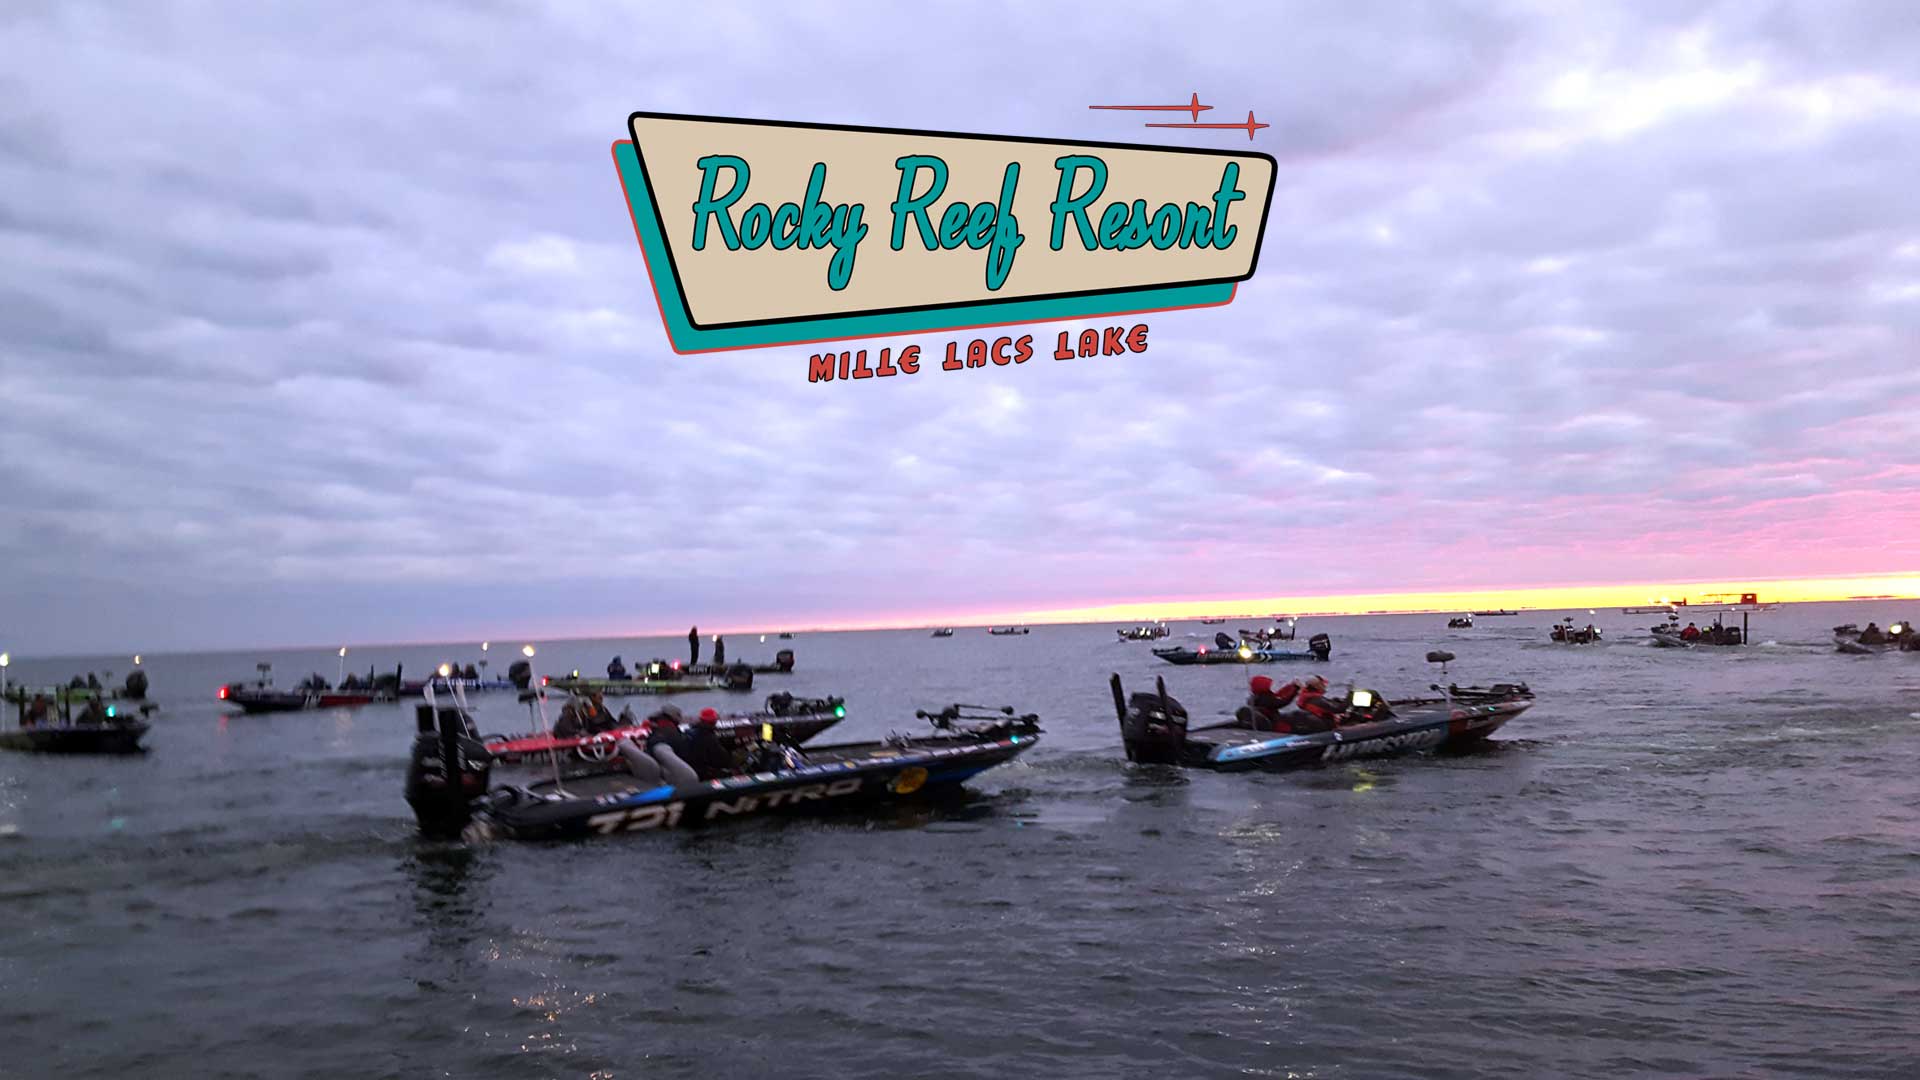 World Class Bass Fishing at Rocky Reef Resort